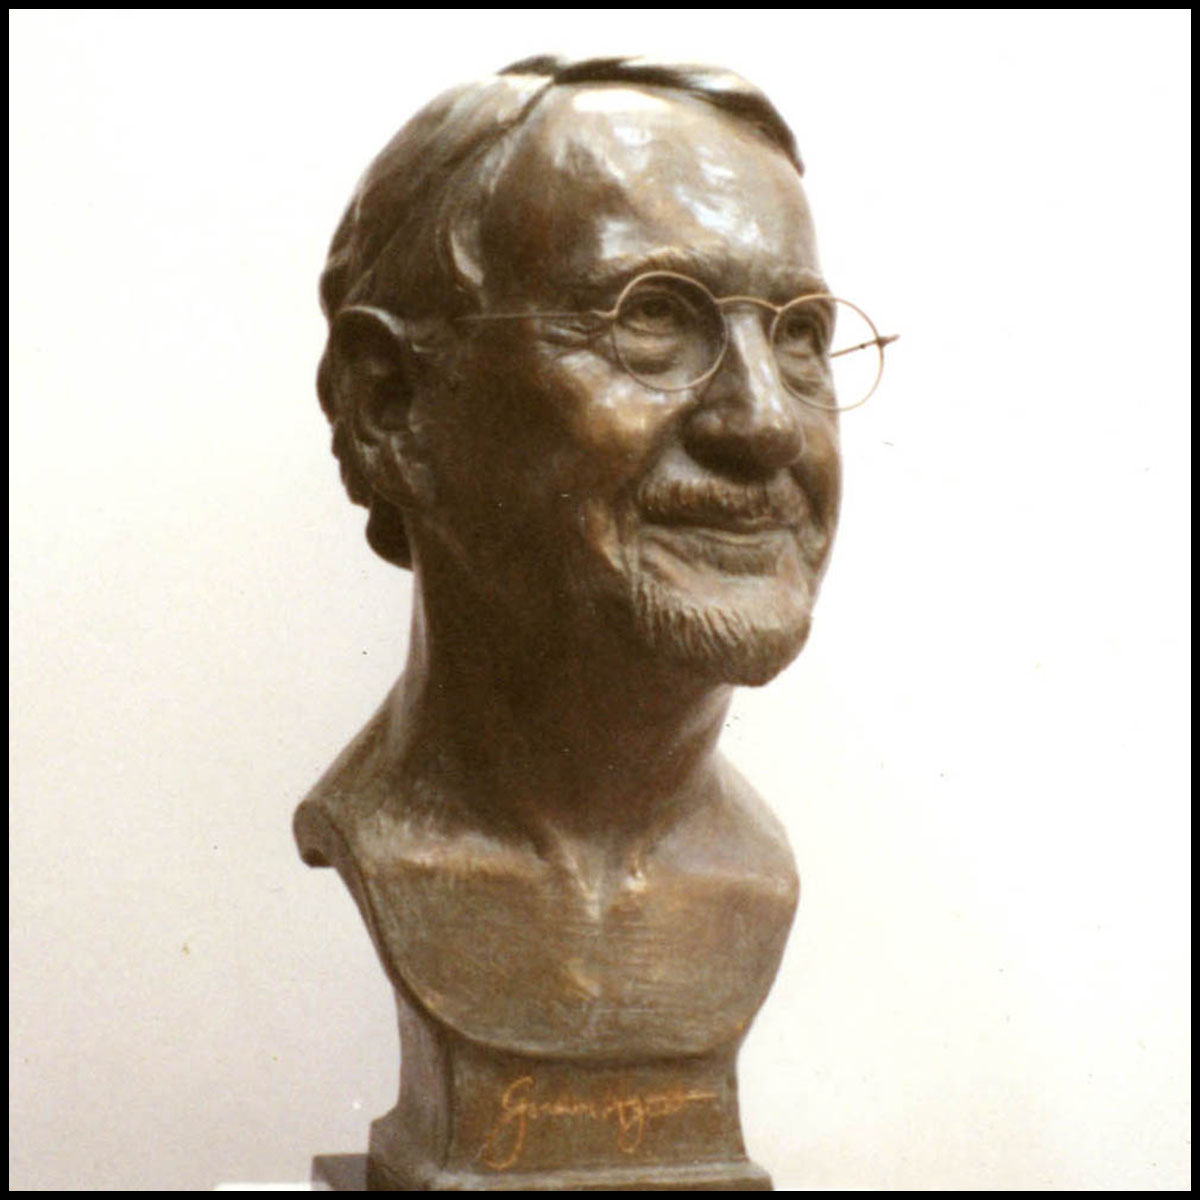 photo of bronze-colored sculpture bust of Gordon Hyatt against white background